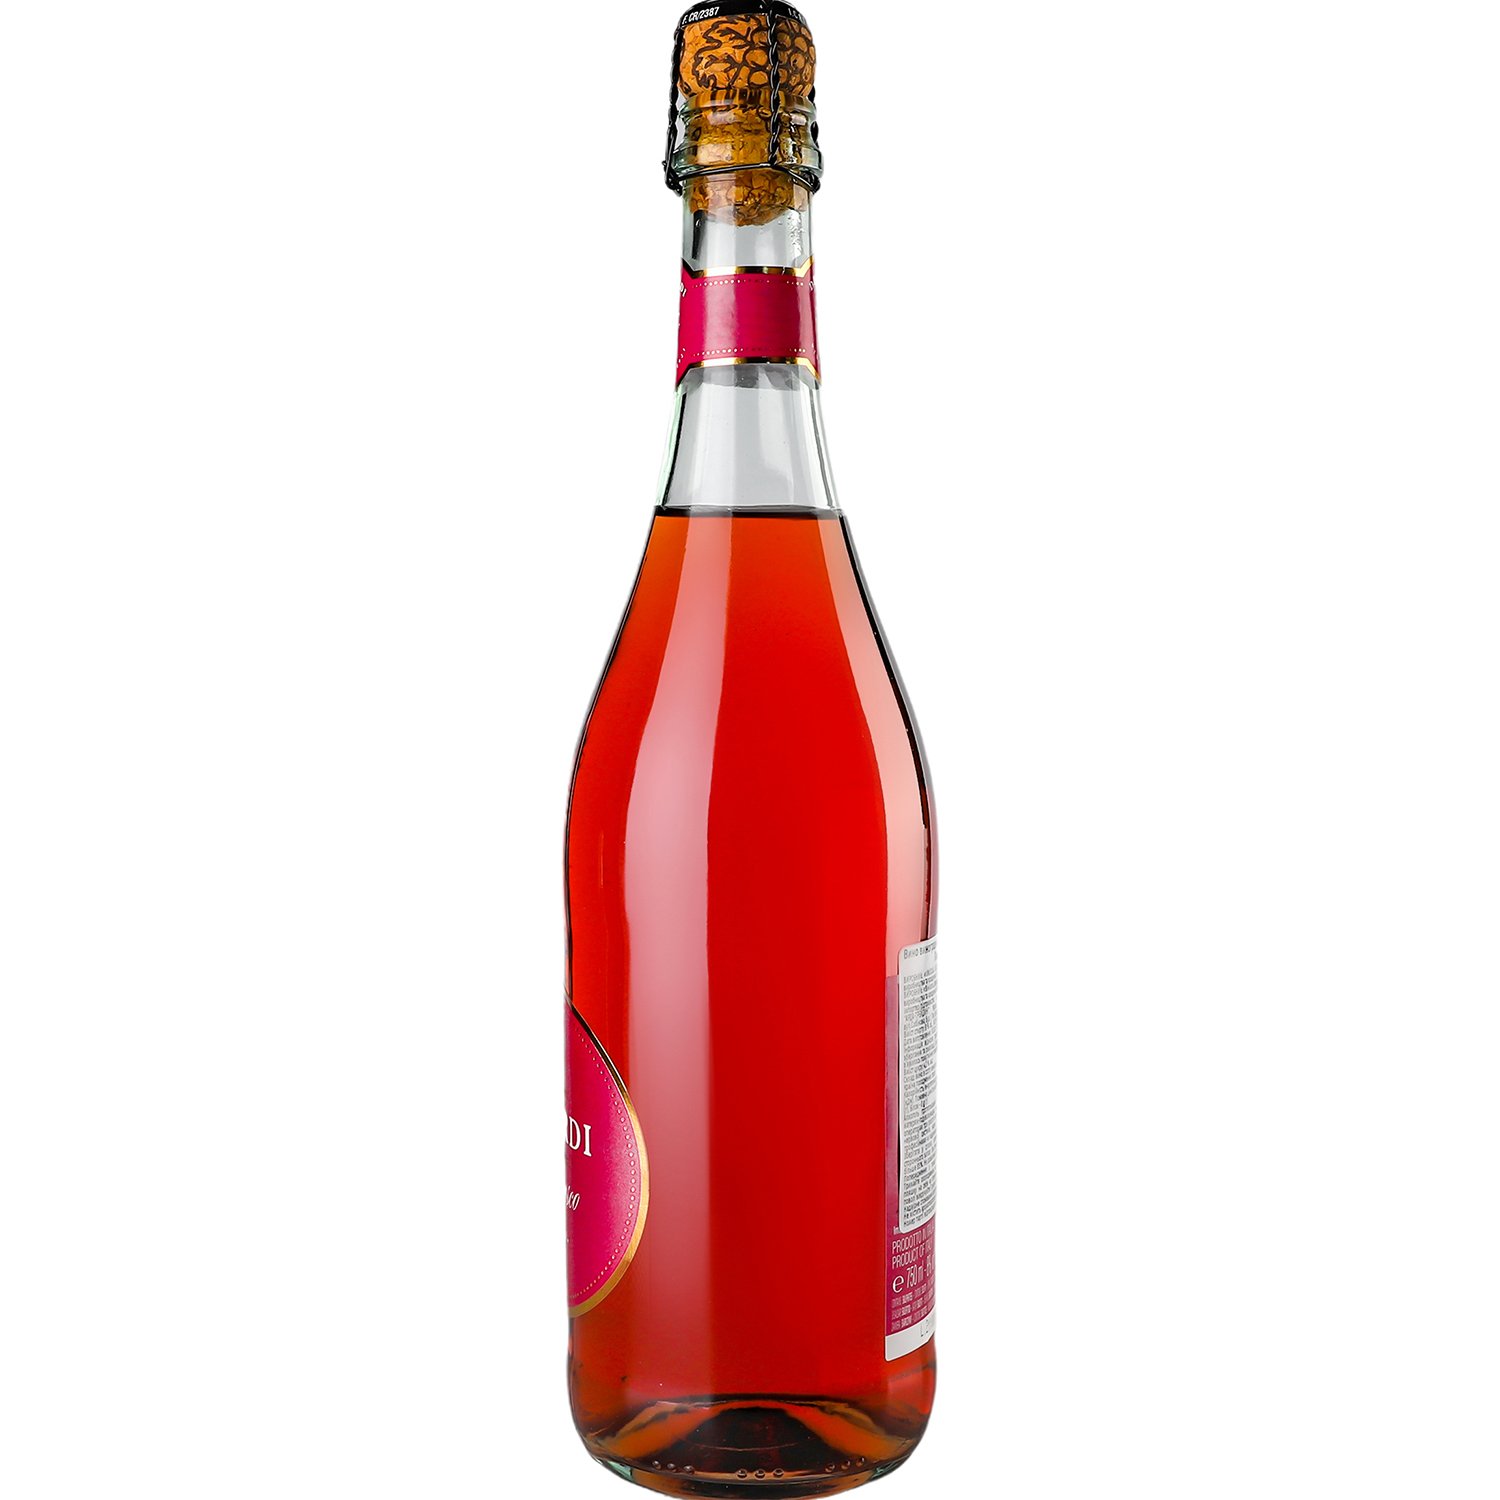 Вино игристое Decordi Lambrusco Rosato Amabile, розовое, полусладкое, 8%, 0,75 л - фото 3